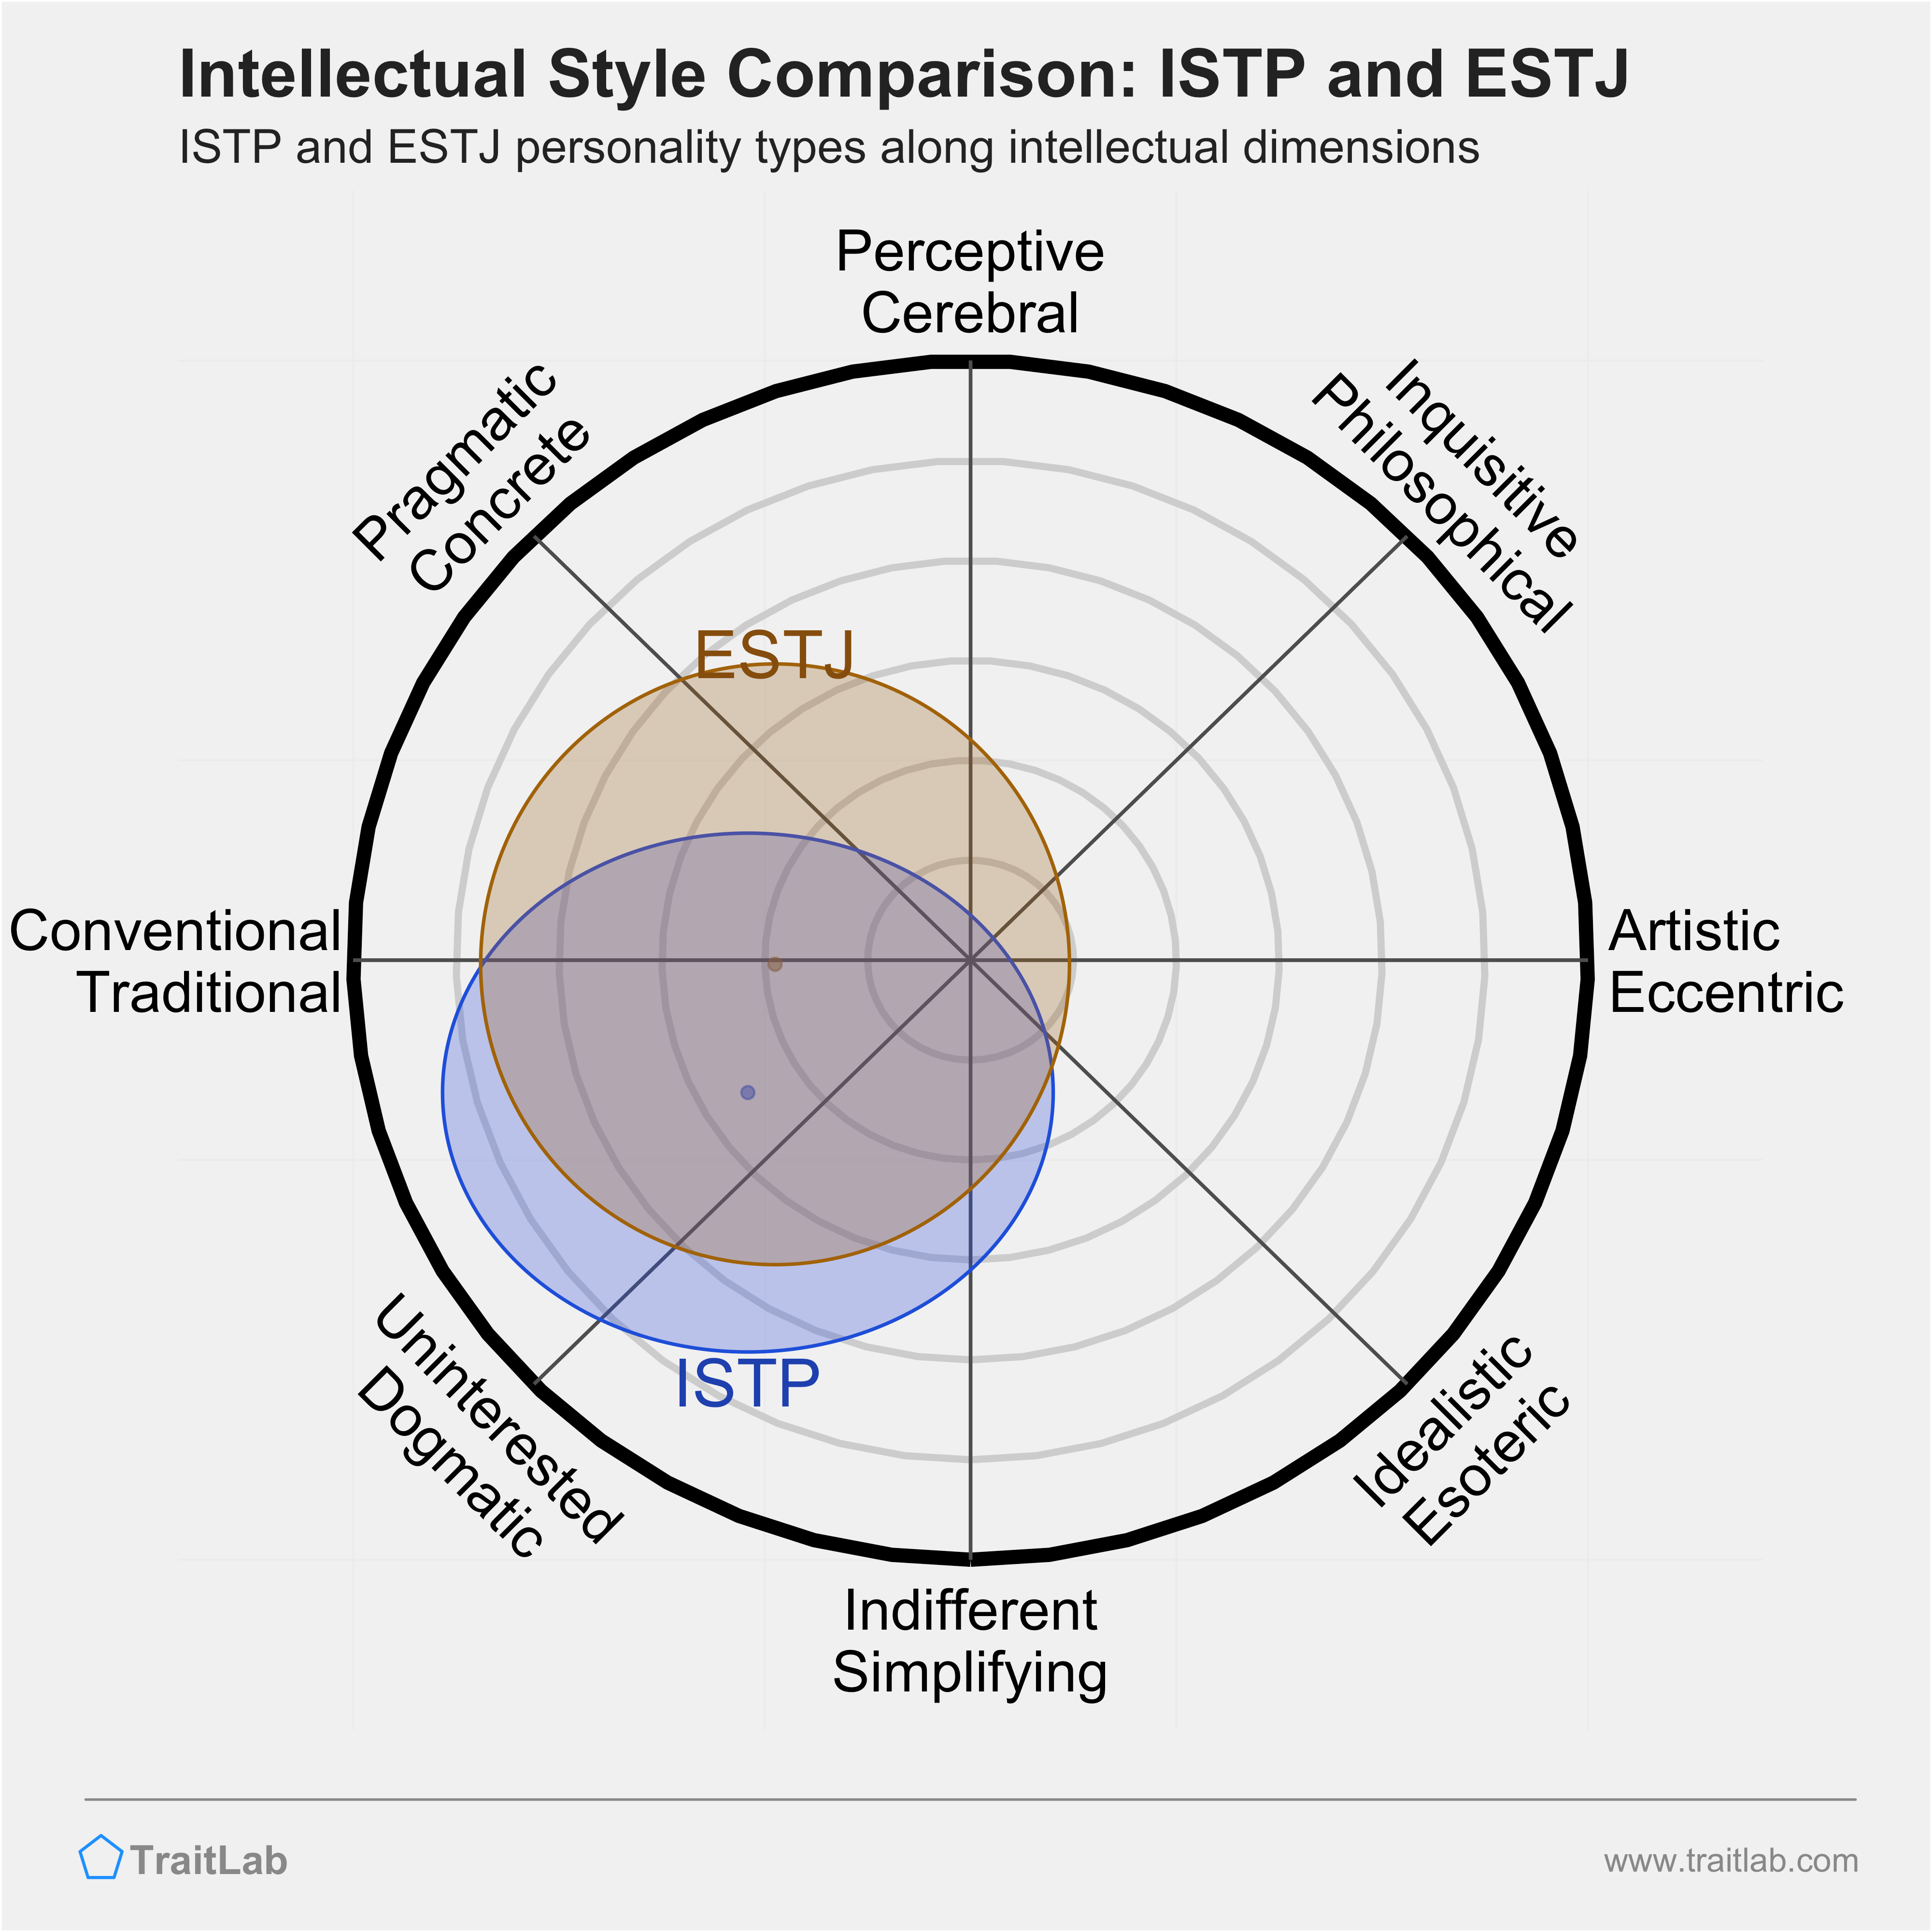 ISTP and ESTJ comparison across intellectual dimensions